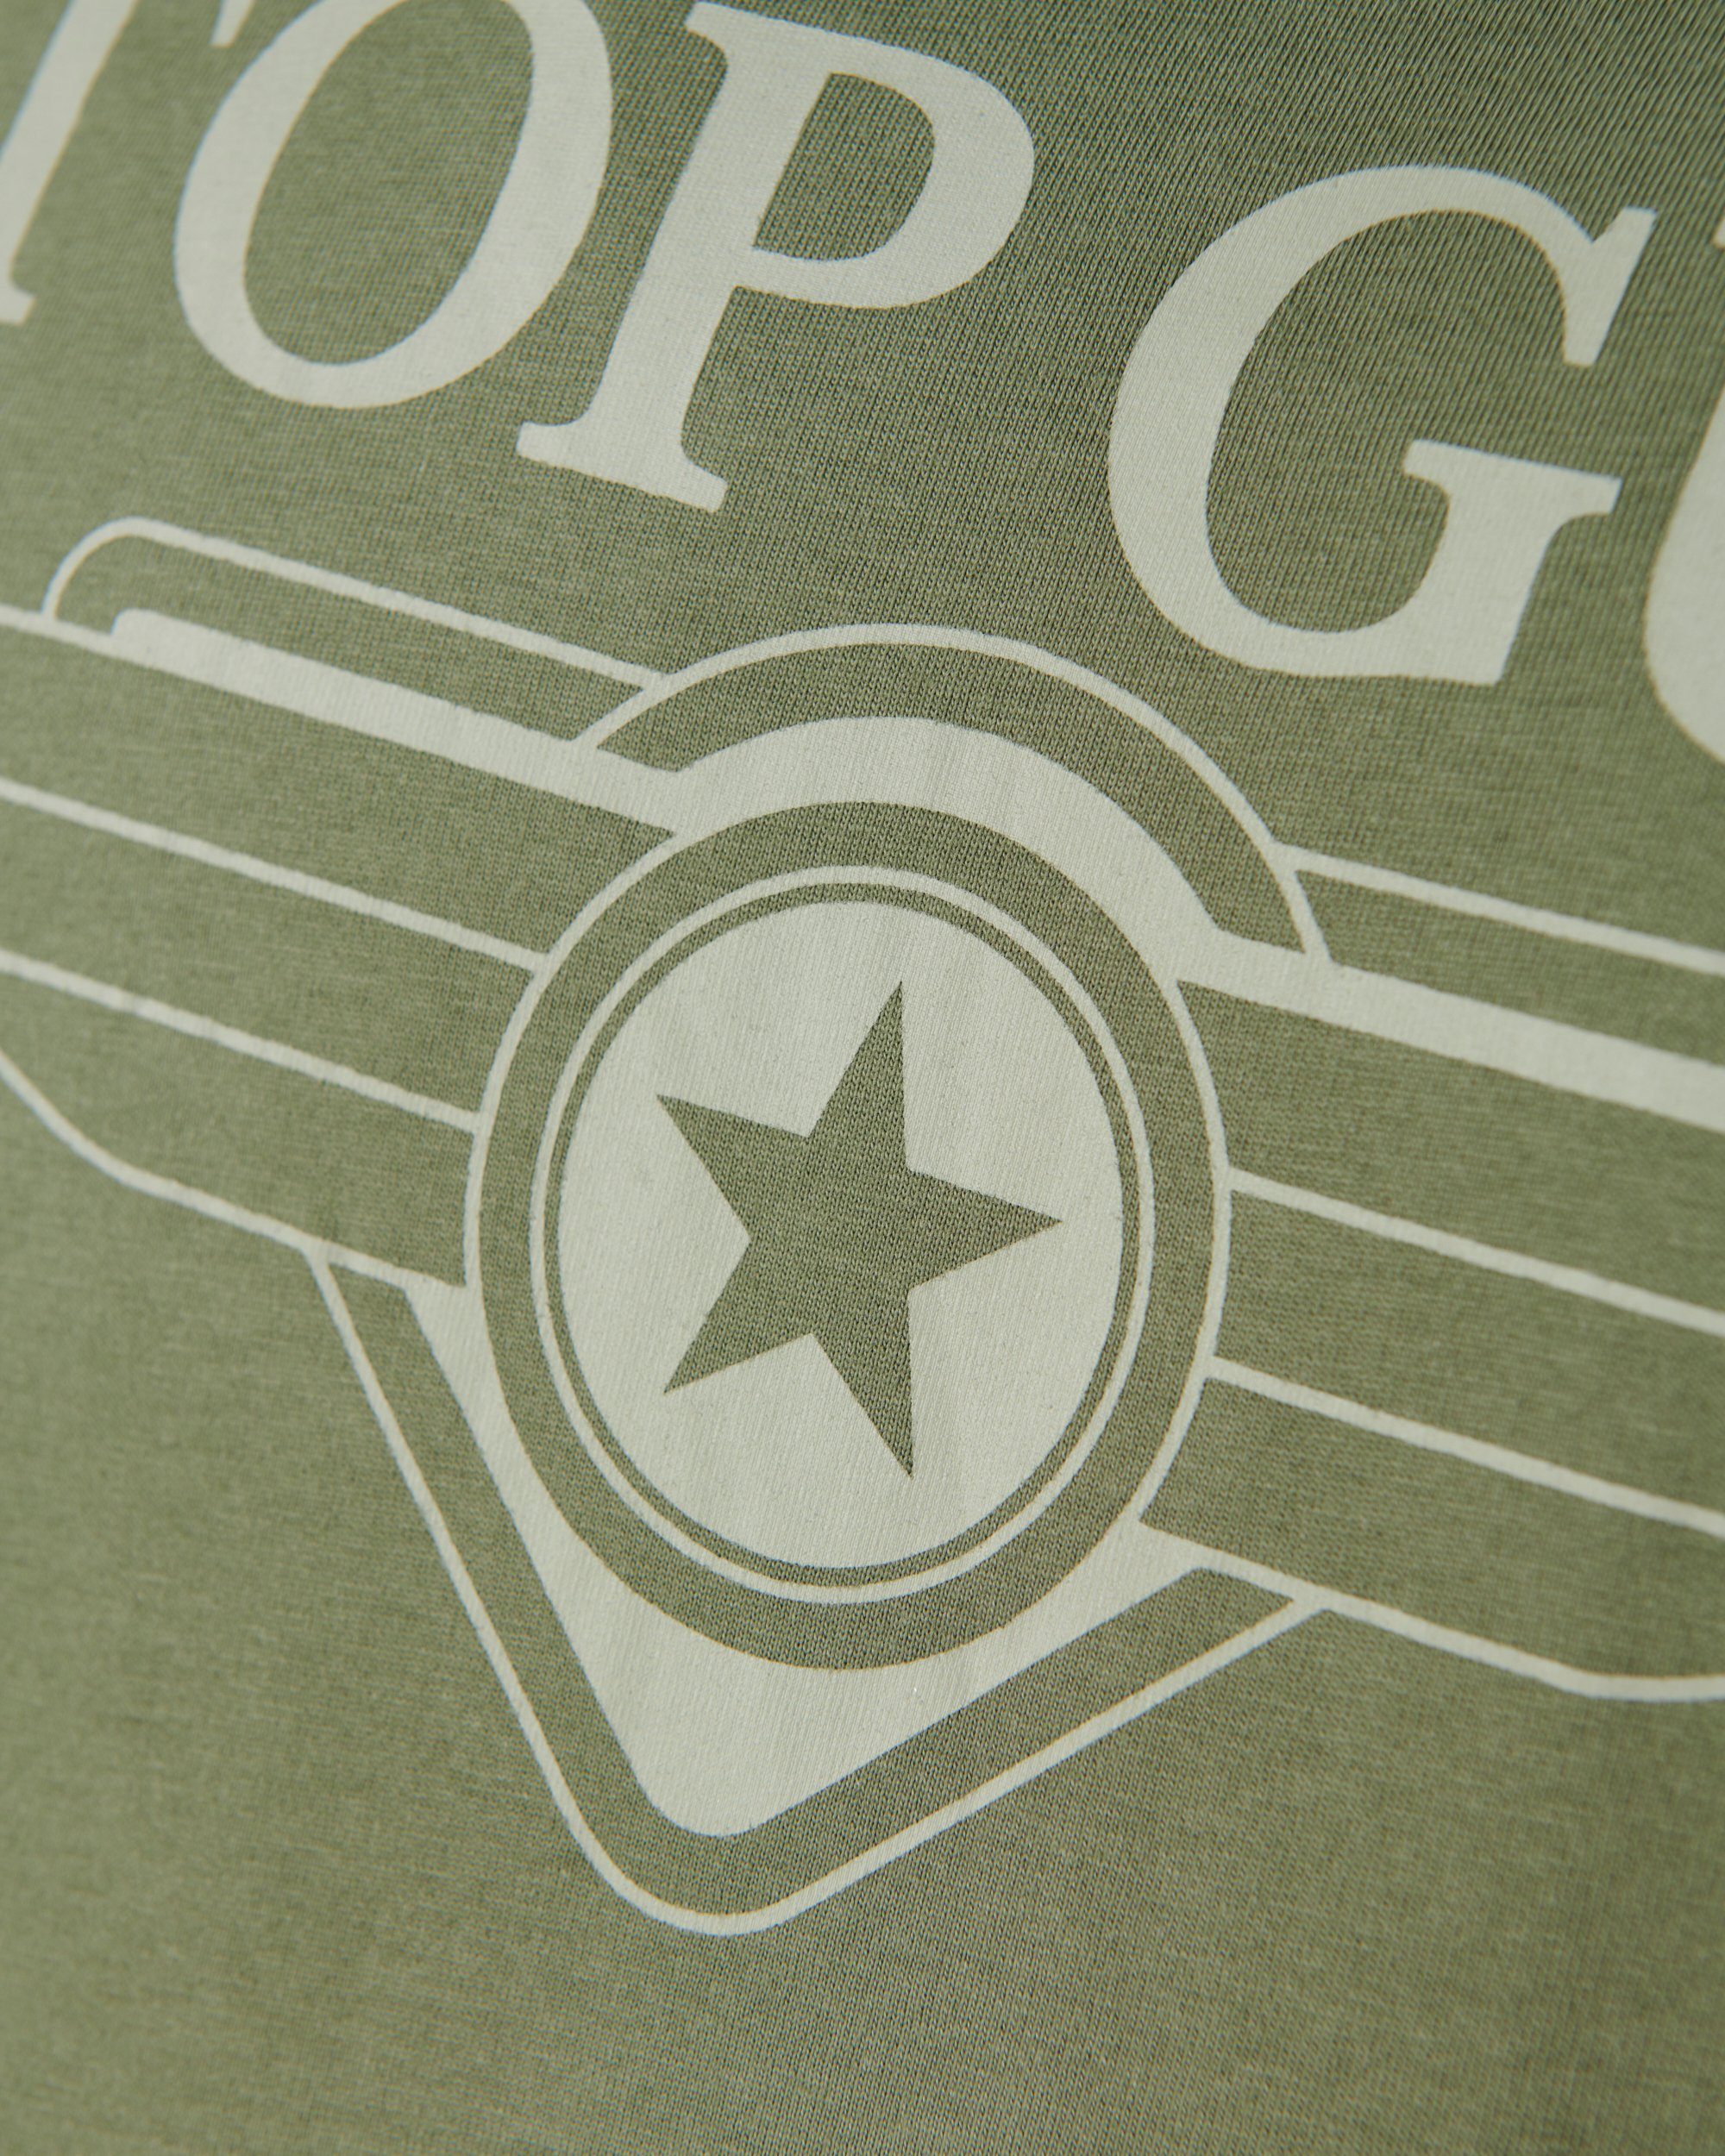 GUN T-Shirt olive TG20201045 TOP